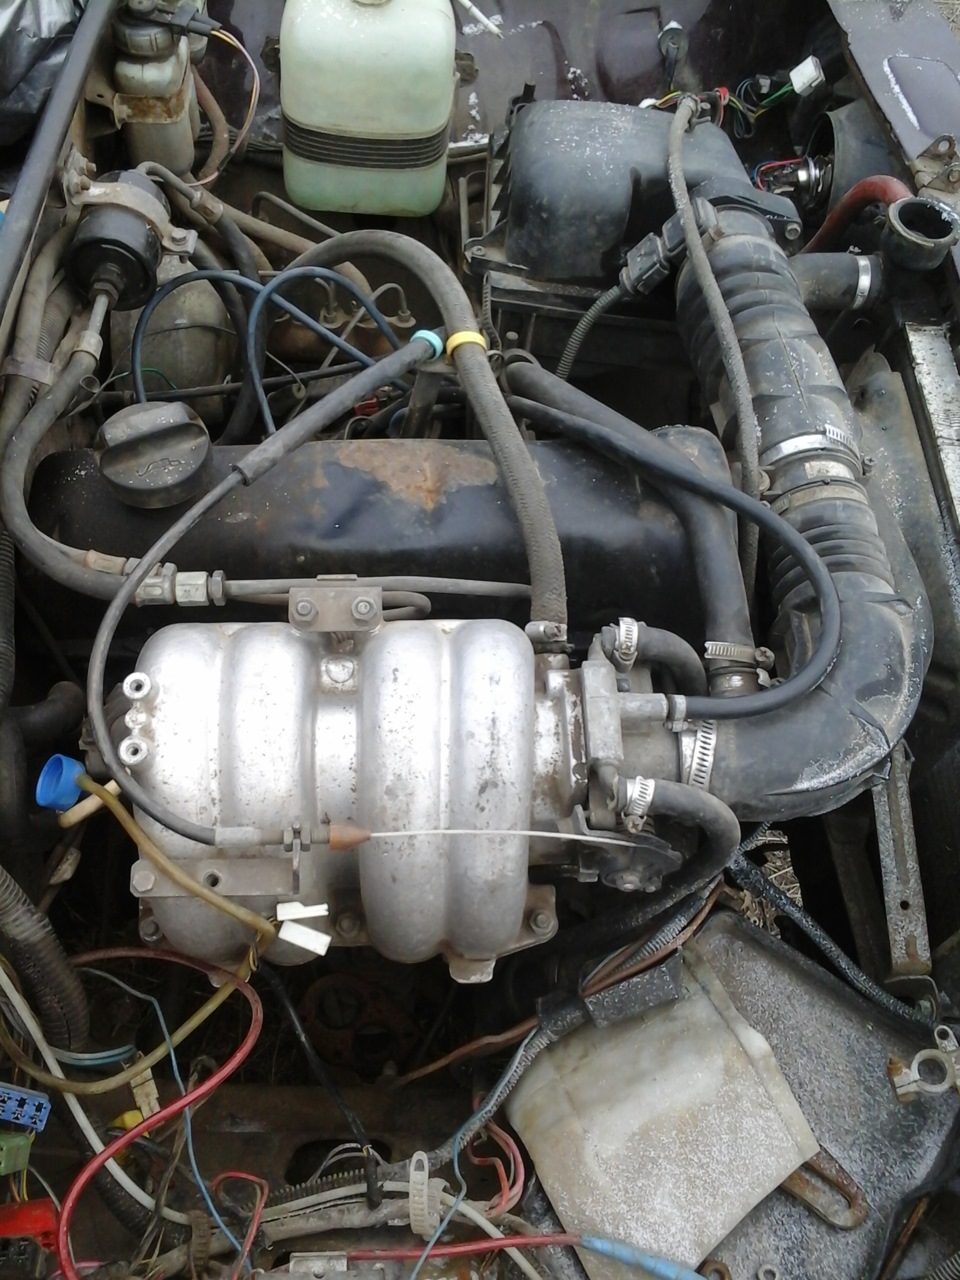 Двигатель 2107 б у